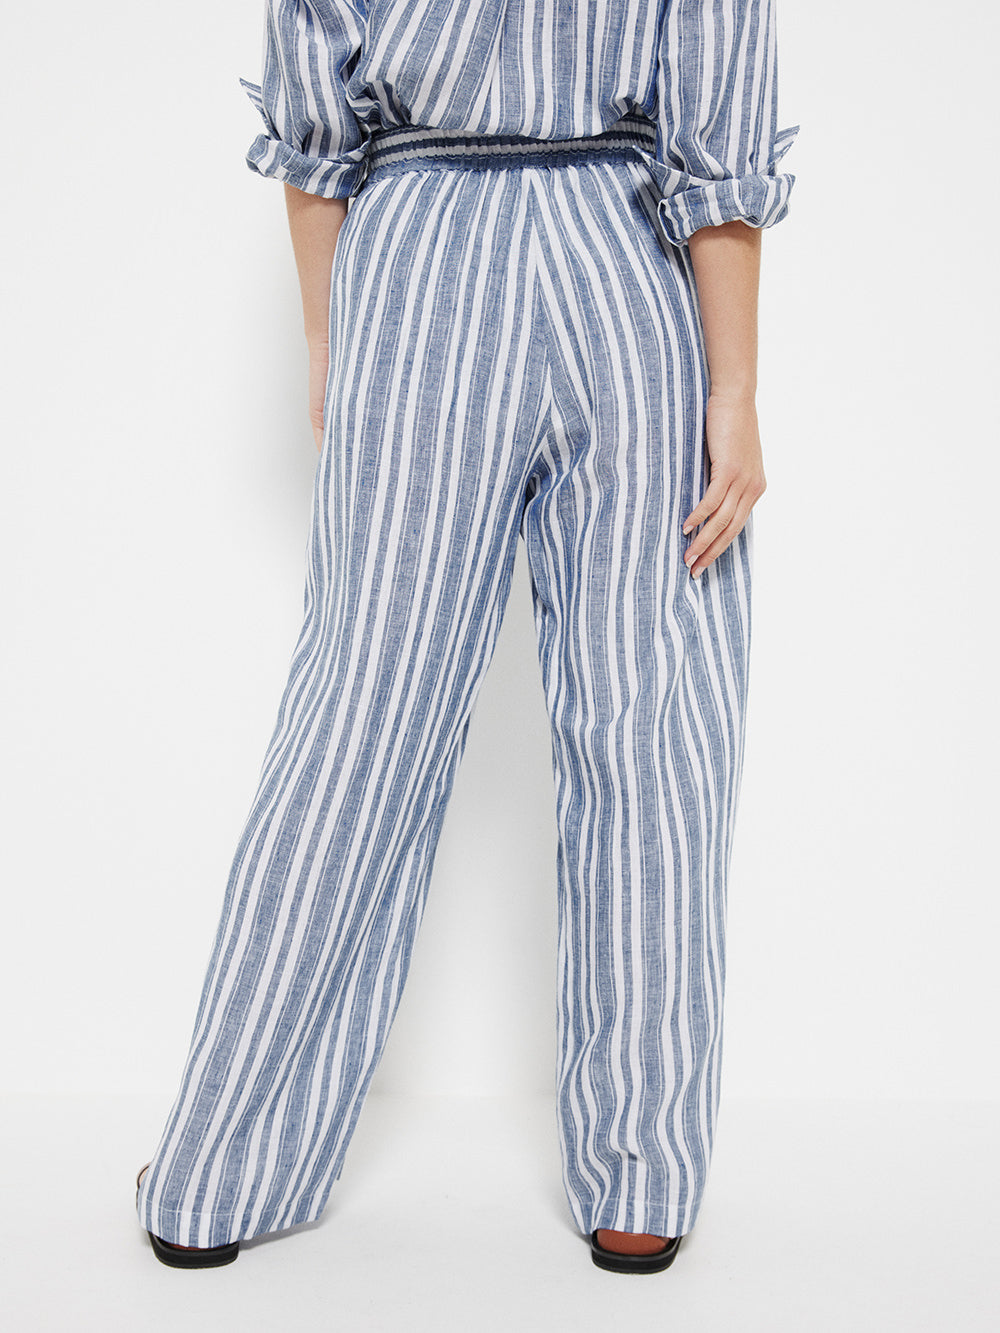 blue #striped #linen #pants #outfit #bluestripedlinenpantsoutfit